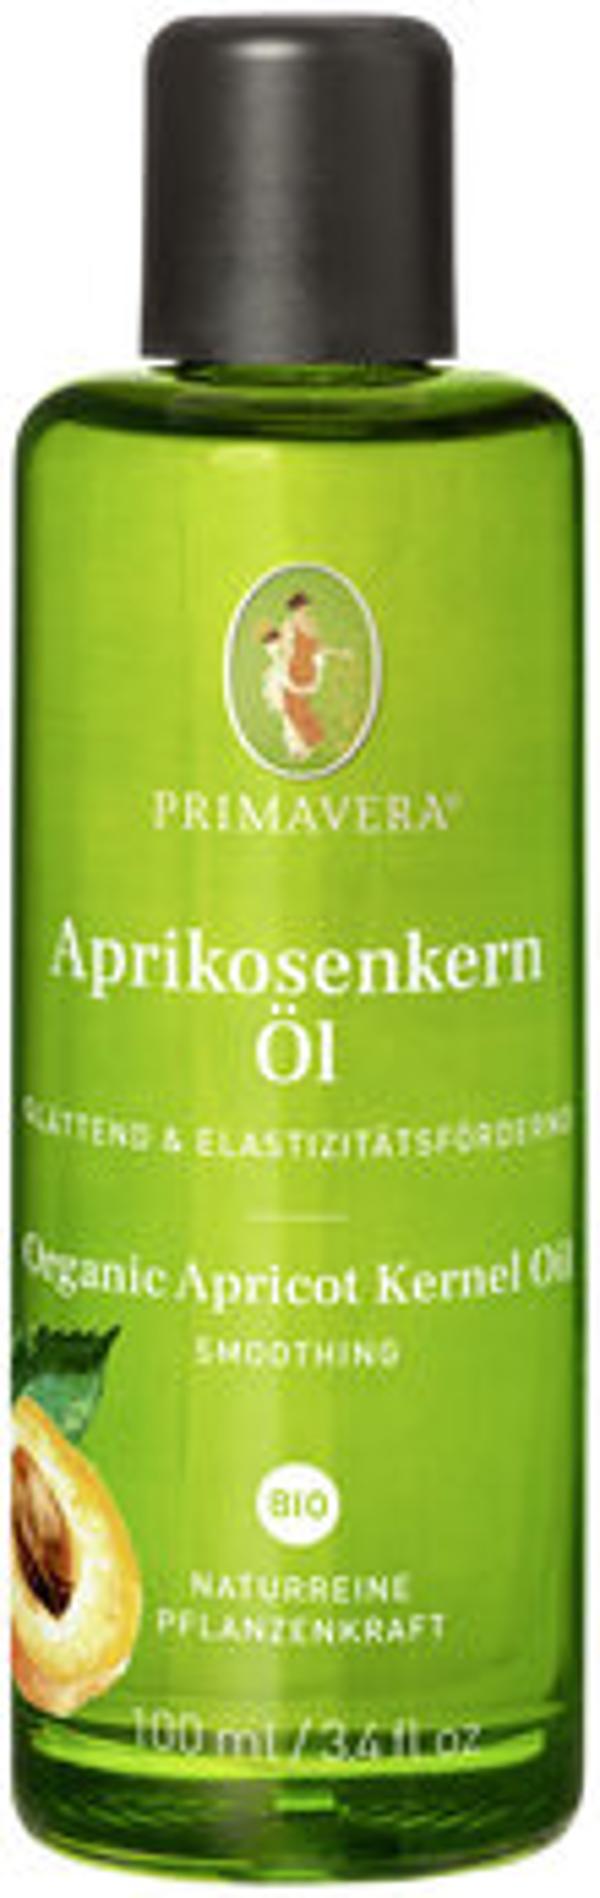 Produktfoto zu Aprikosenkernöl